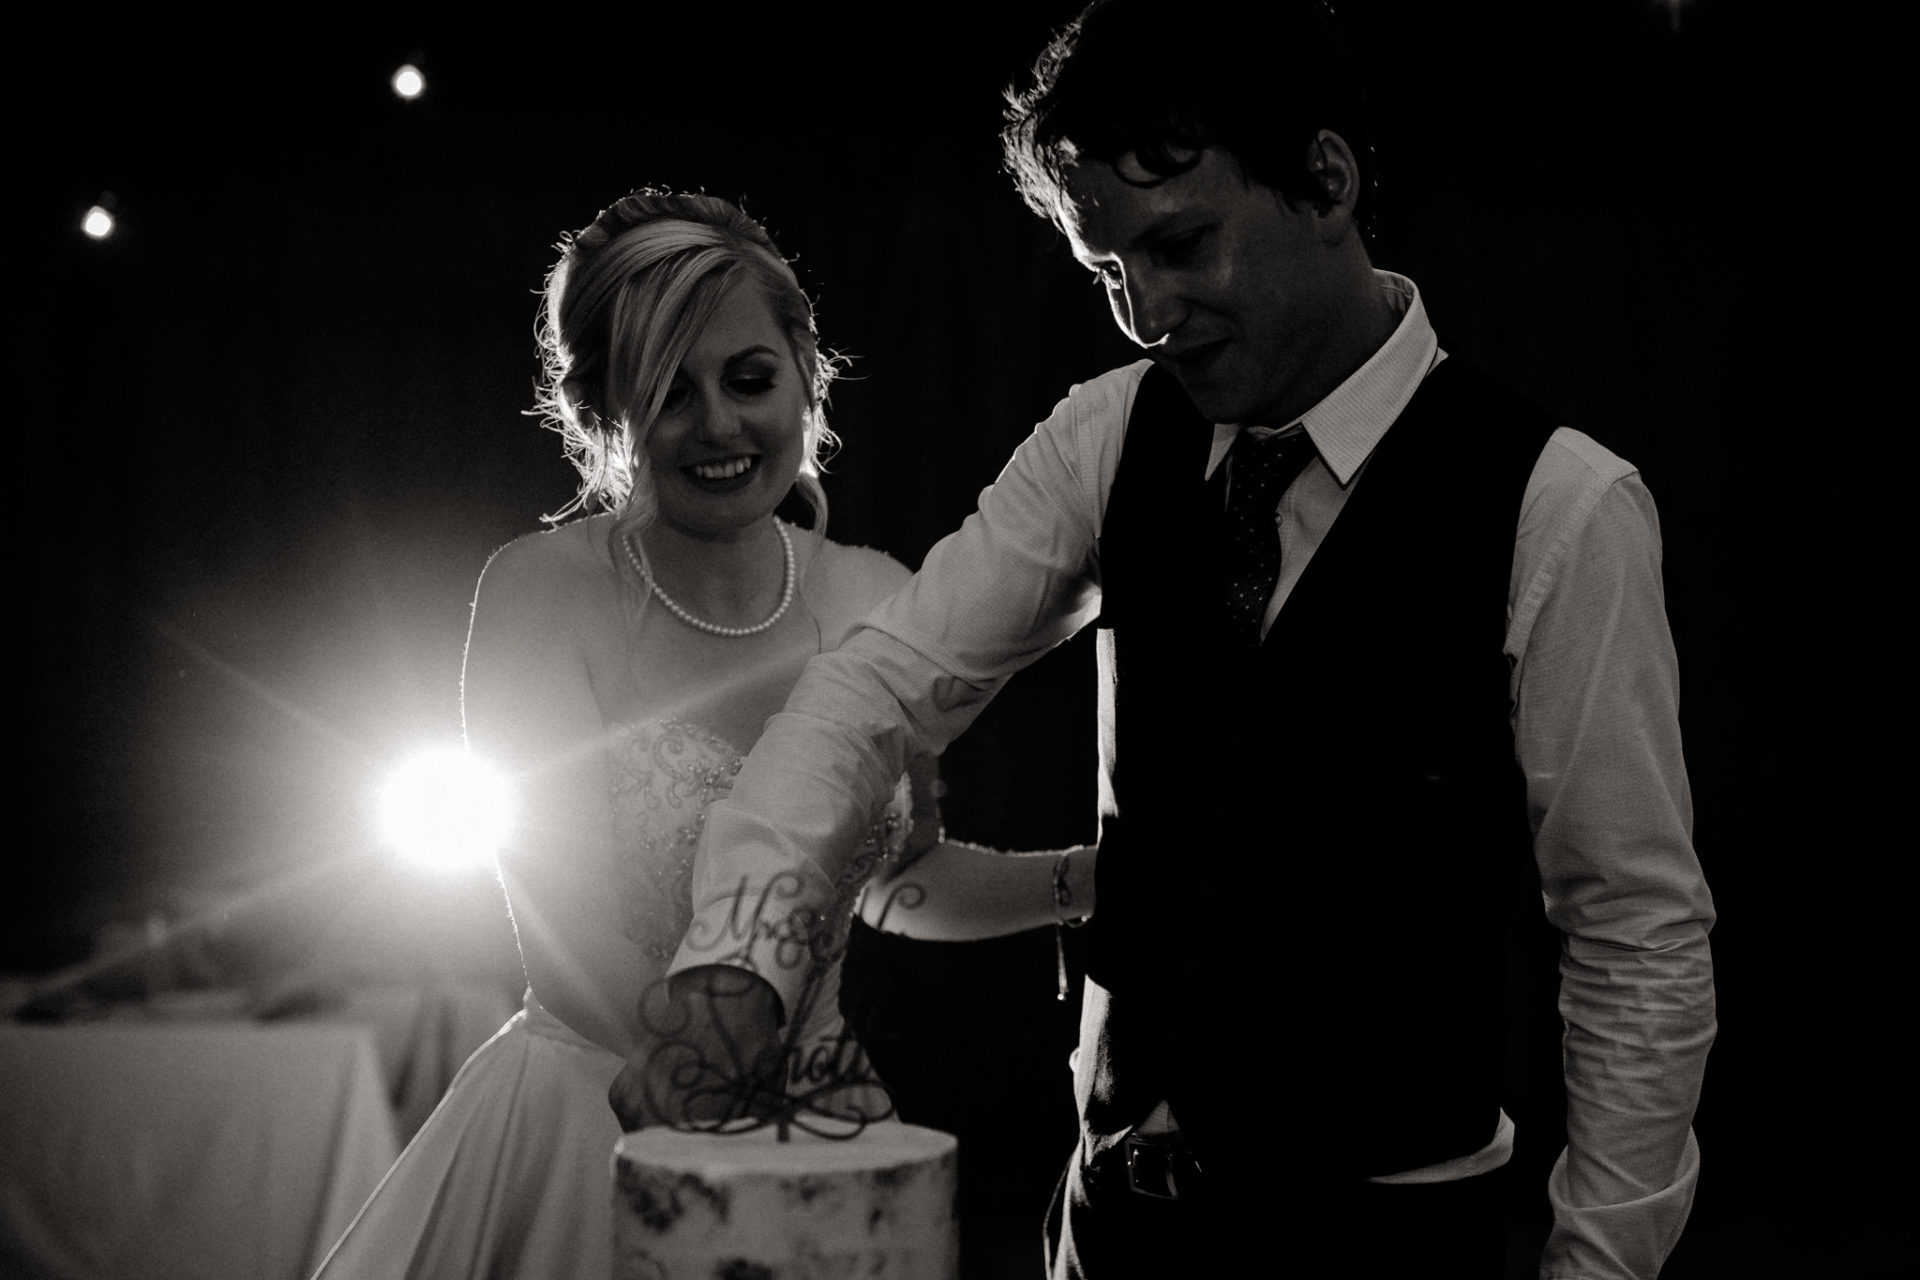 backyard-wedding-australia-melbourne-cake-cutting-bride-groom